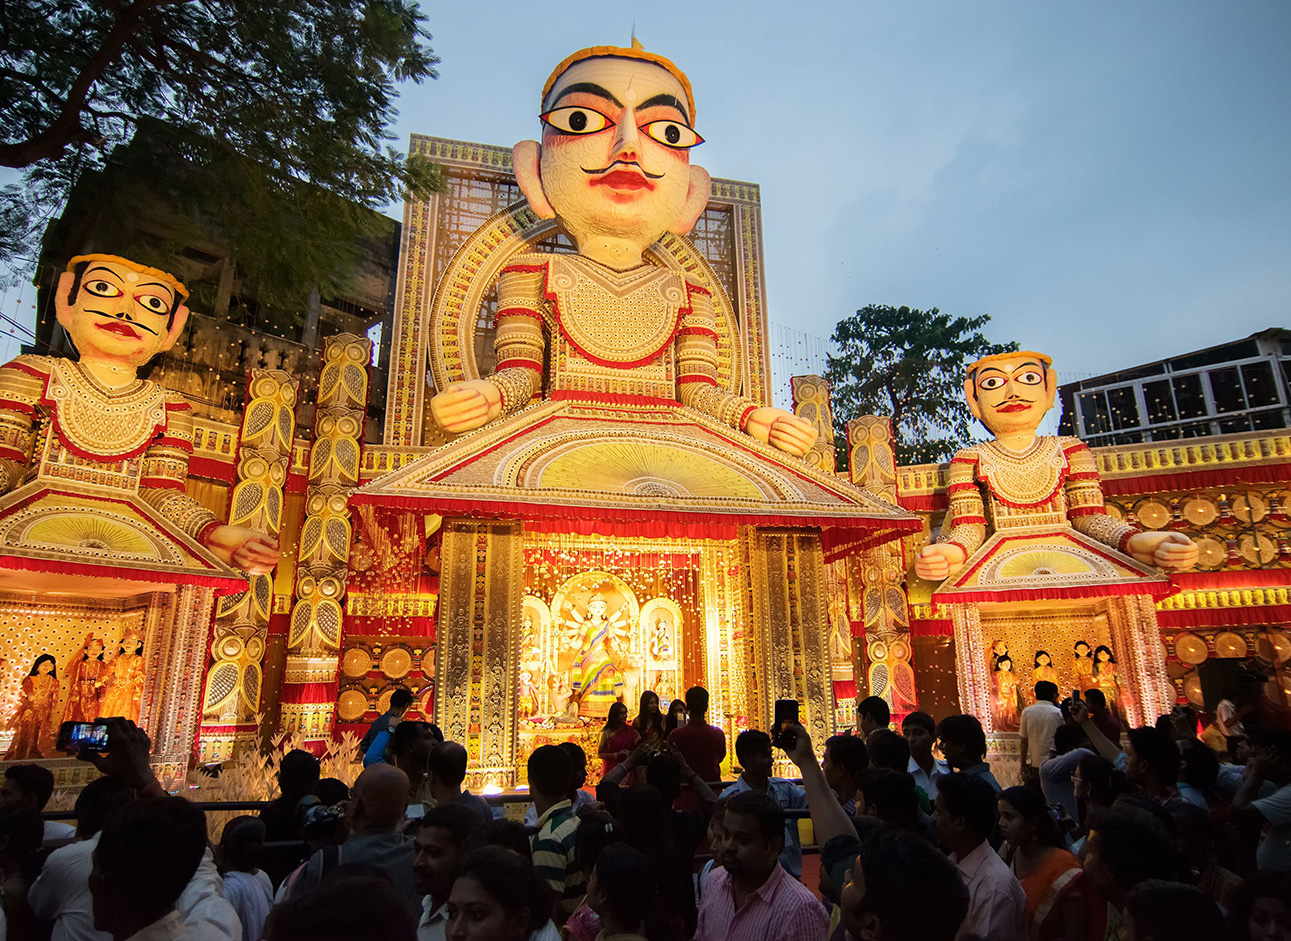 Festivals - Celebrate joyous moments and cultural traditions at vibrant festivals